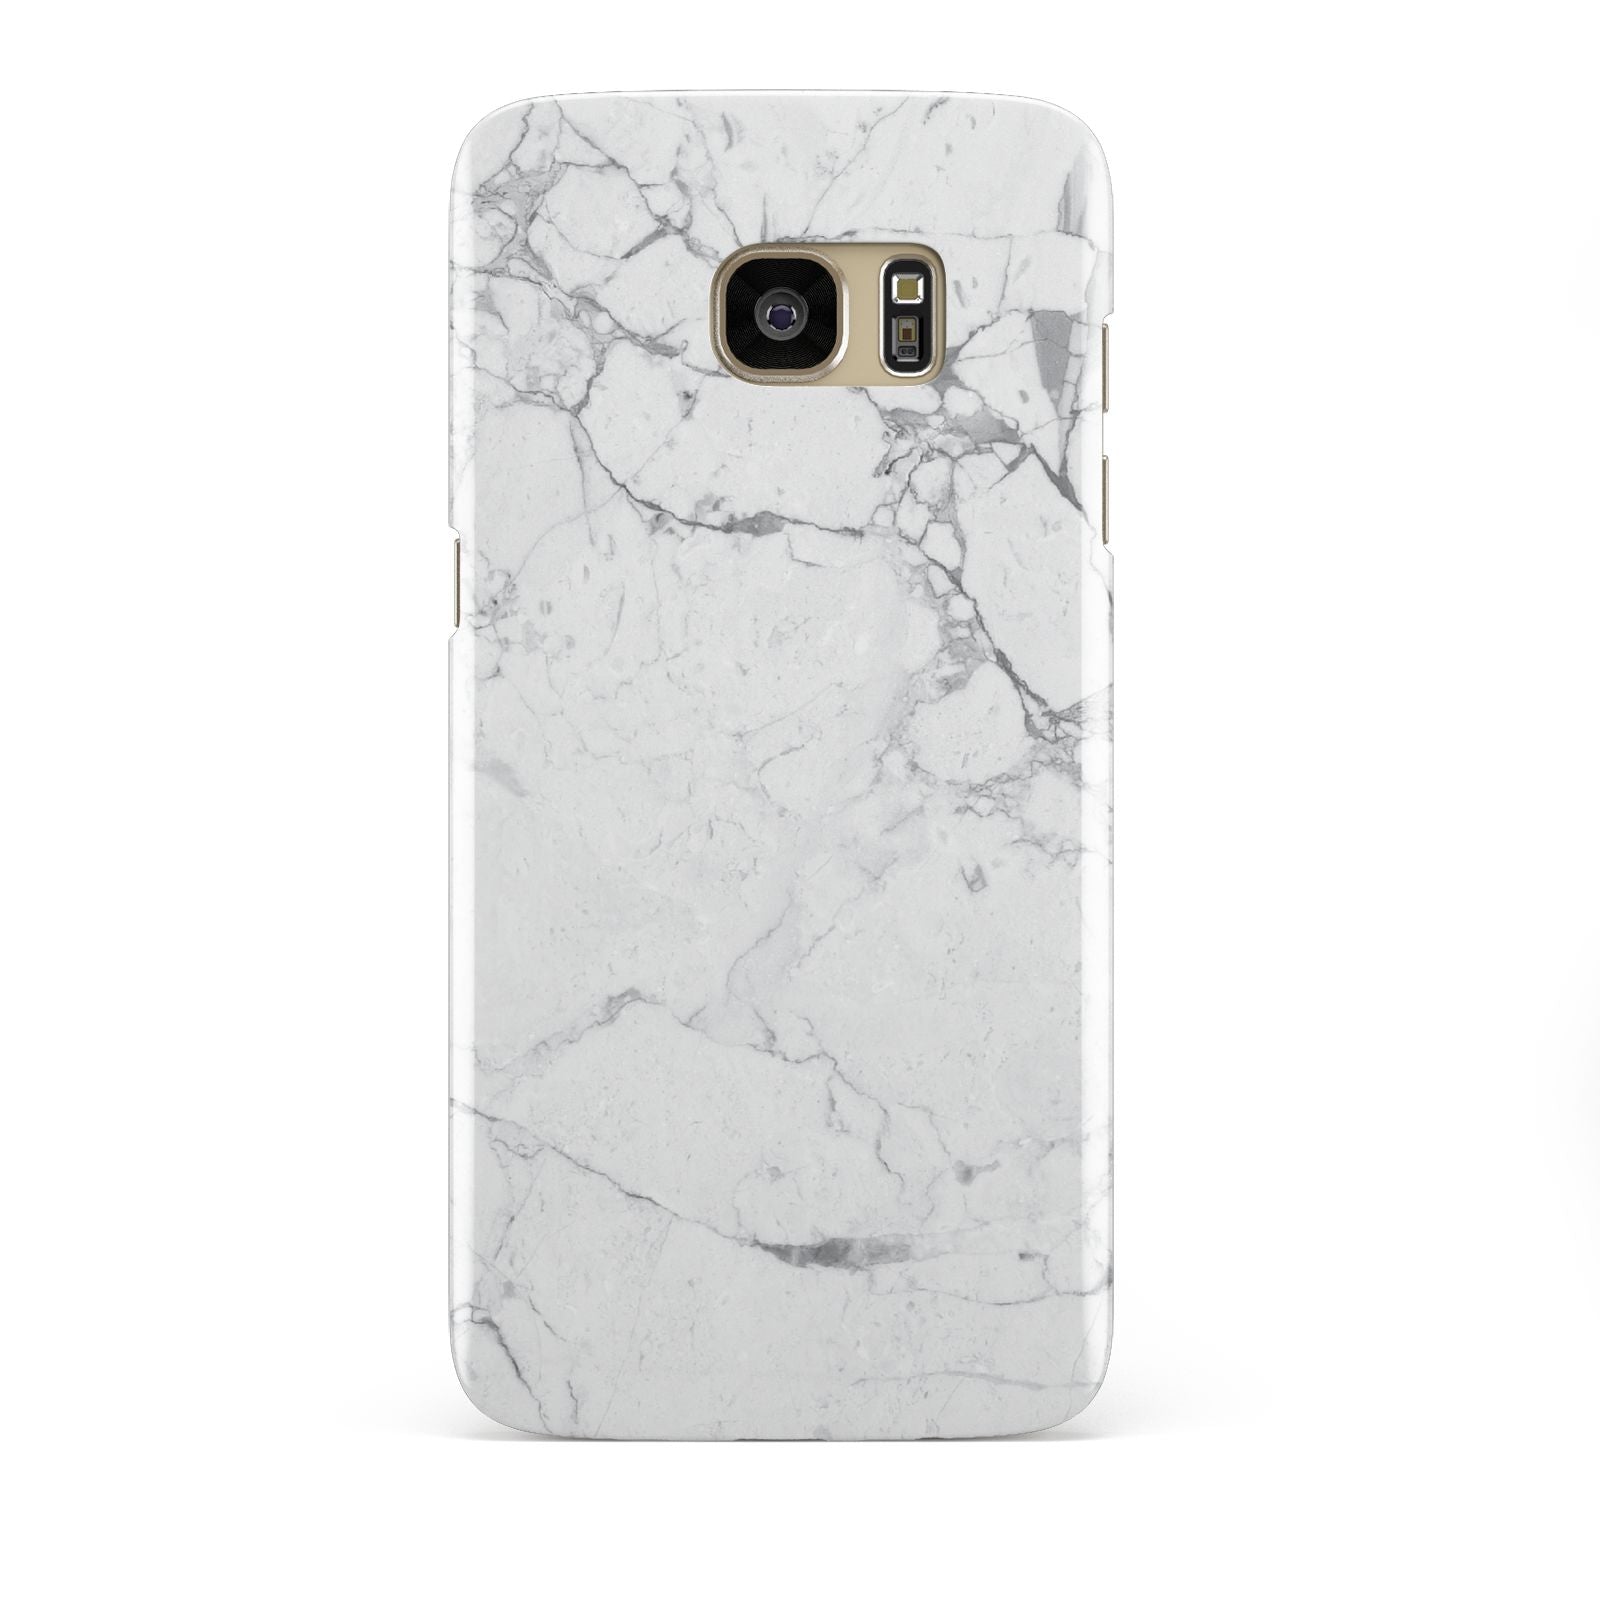 Faux Marble Effect Grey White Samsung Galaxy S7 Edge Case